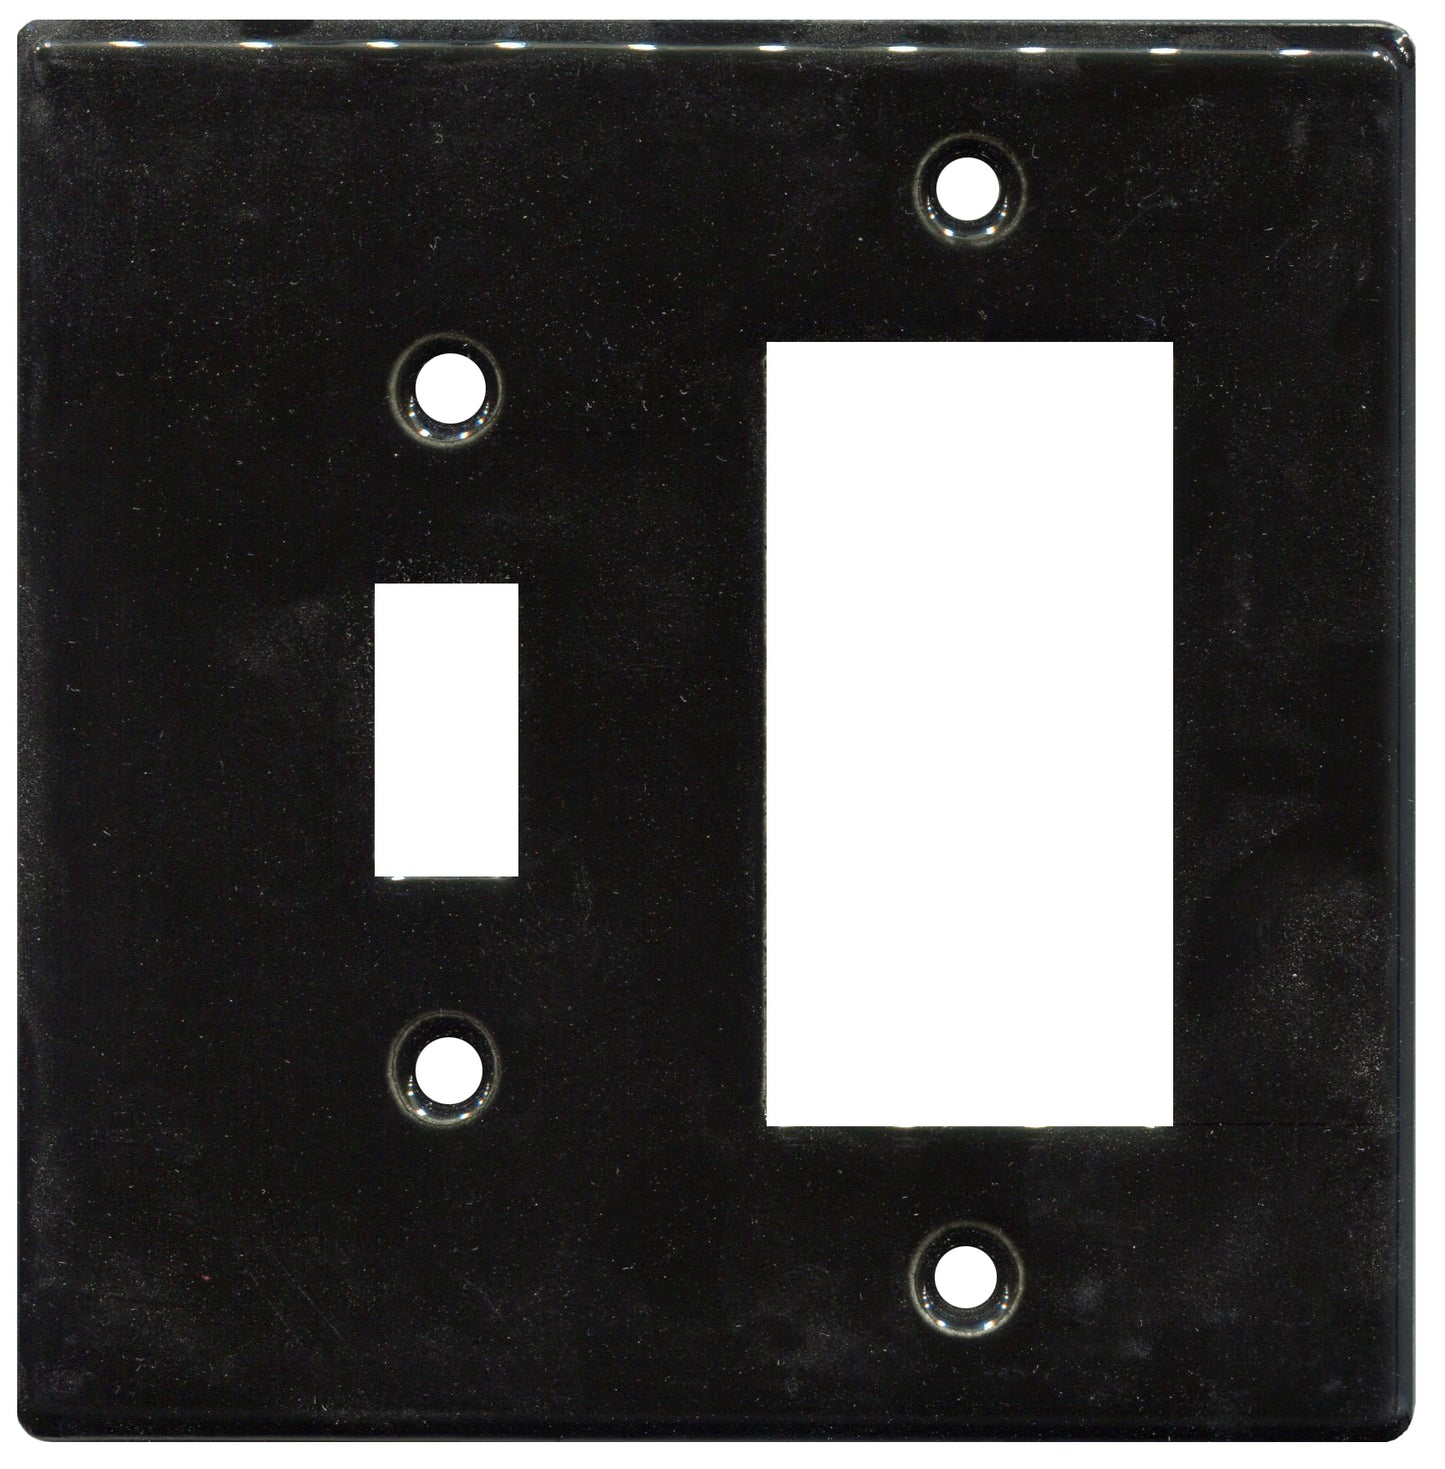  Black GFI/single switch ceramic plate